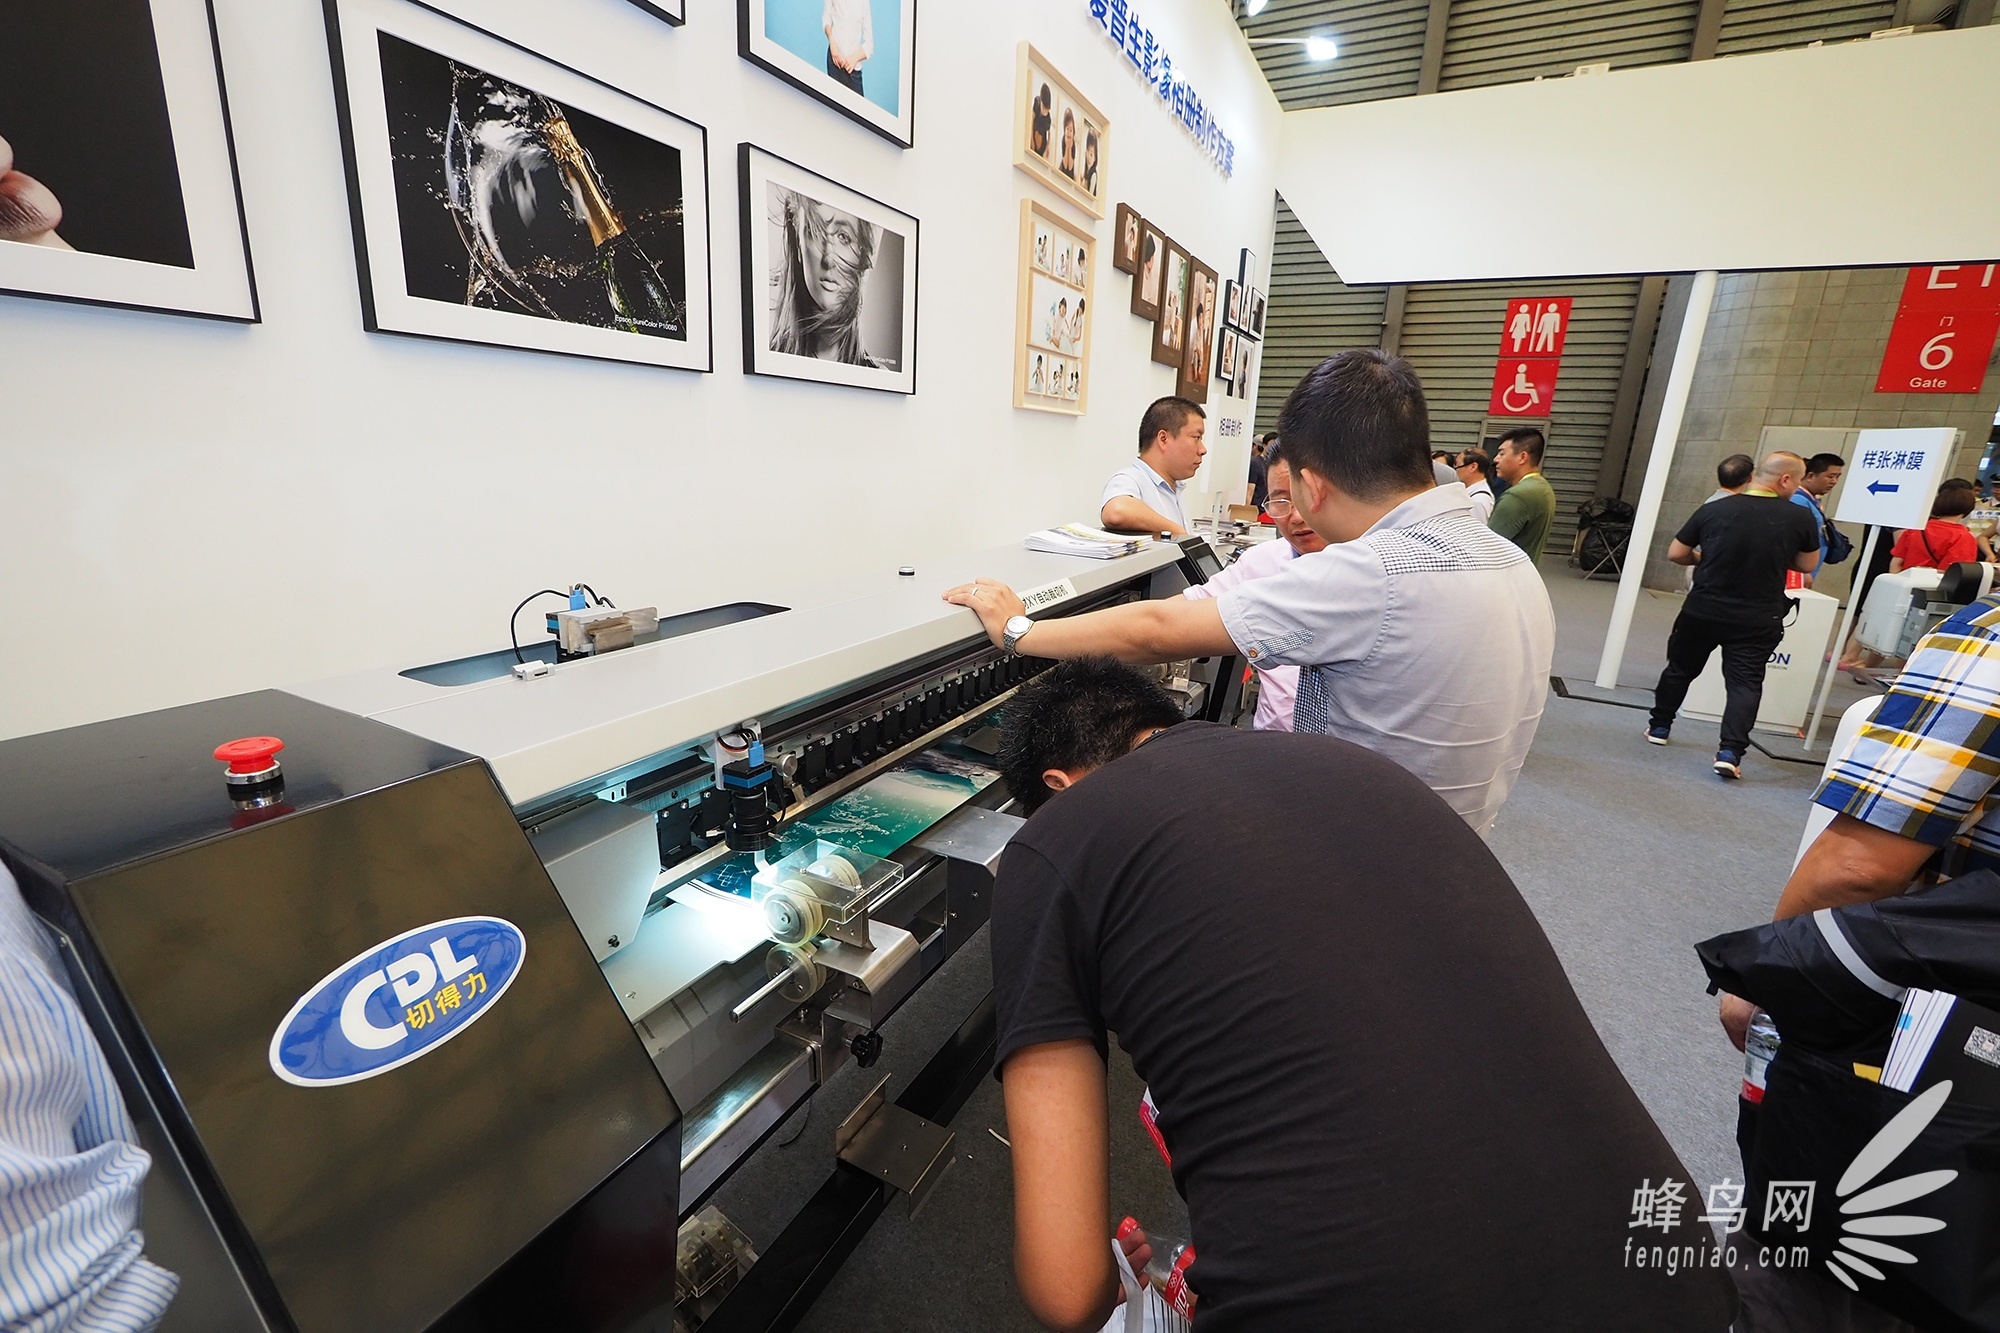 P&I2016：爱普生展台超大幅面打印机展示